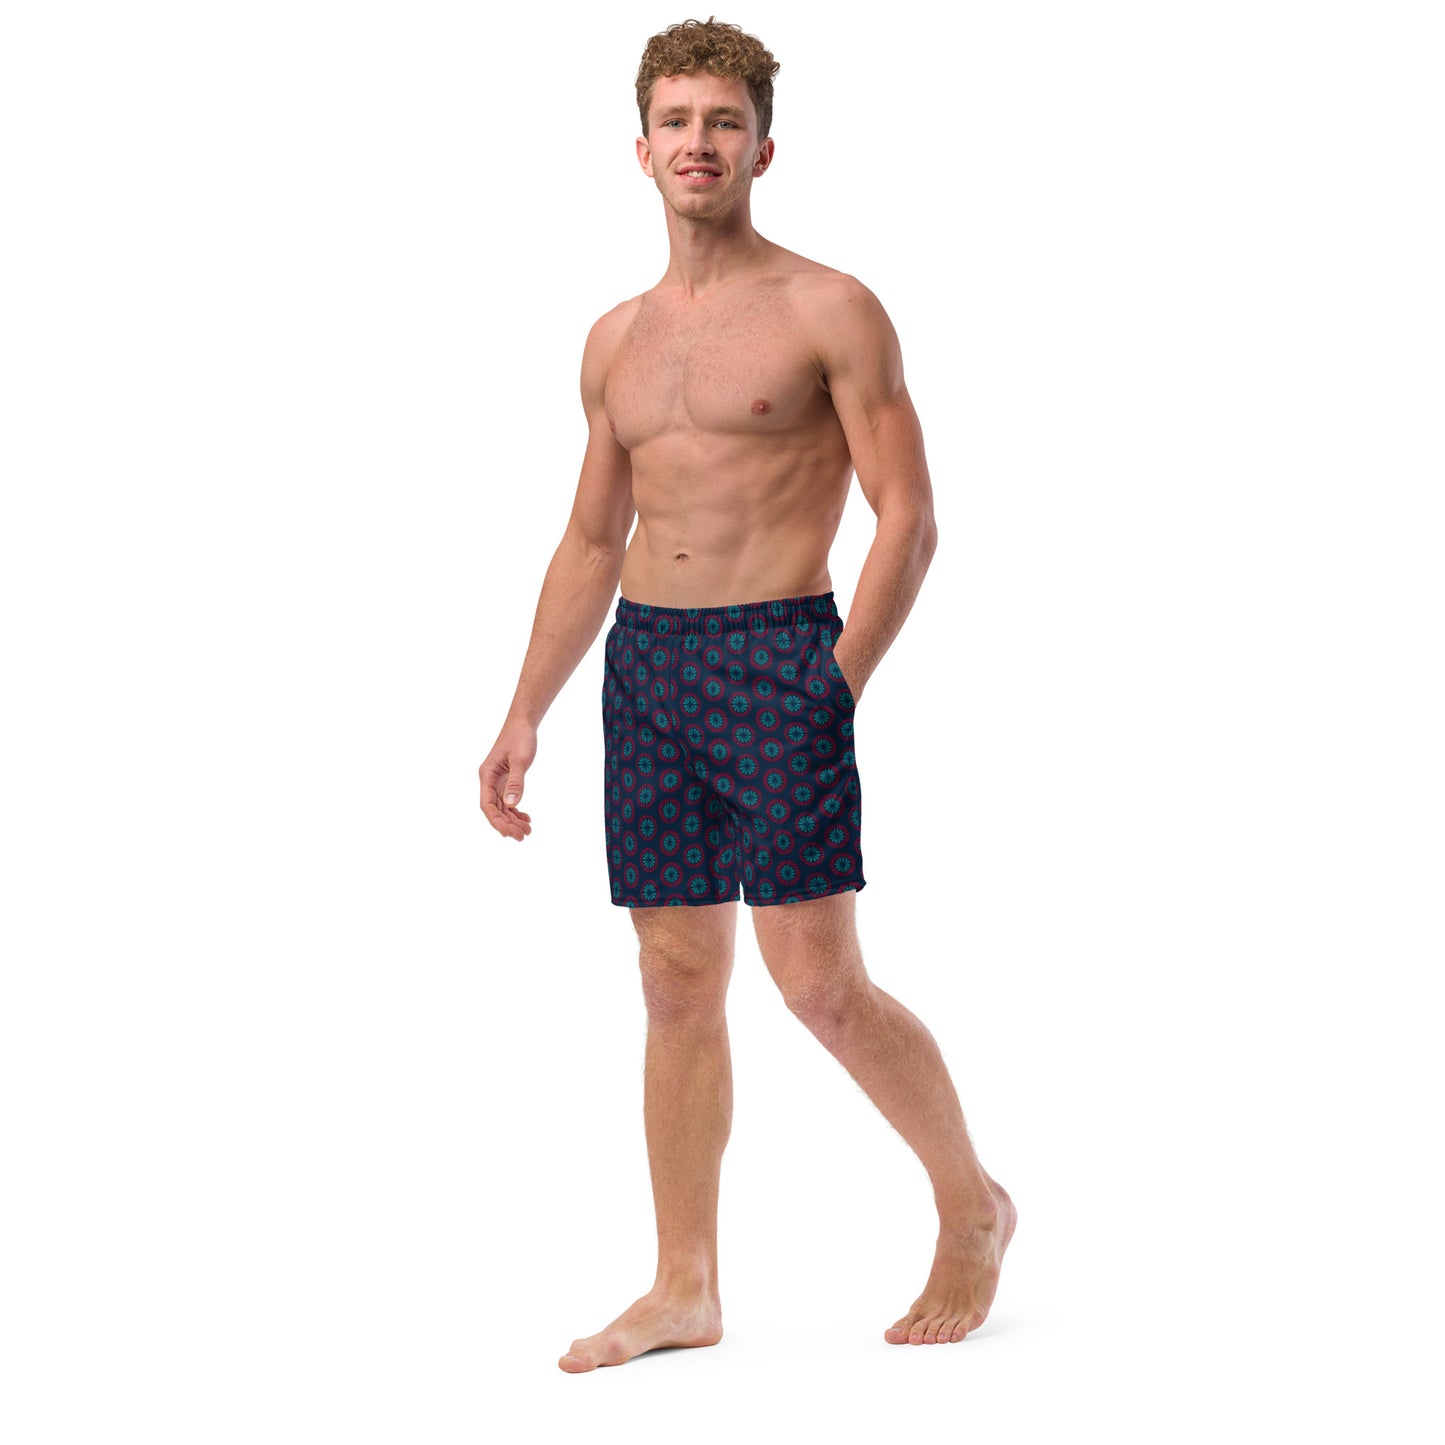 Recycled Men's swim trunks - Geometric Sea Star 🍃